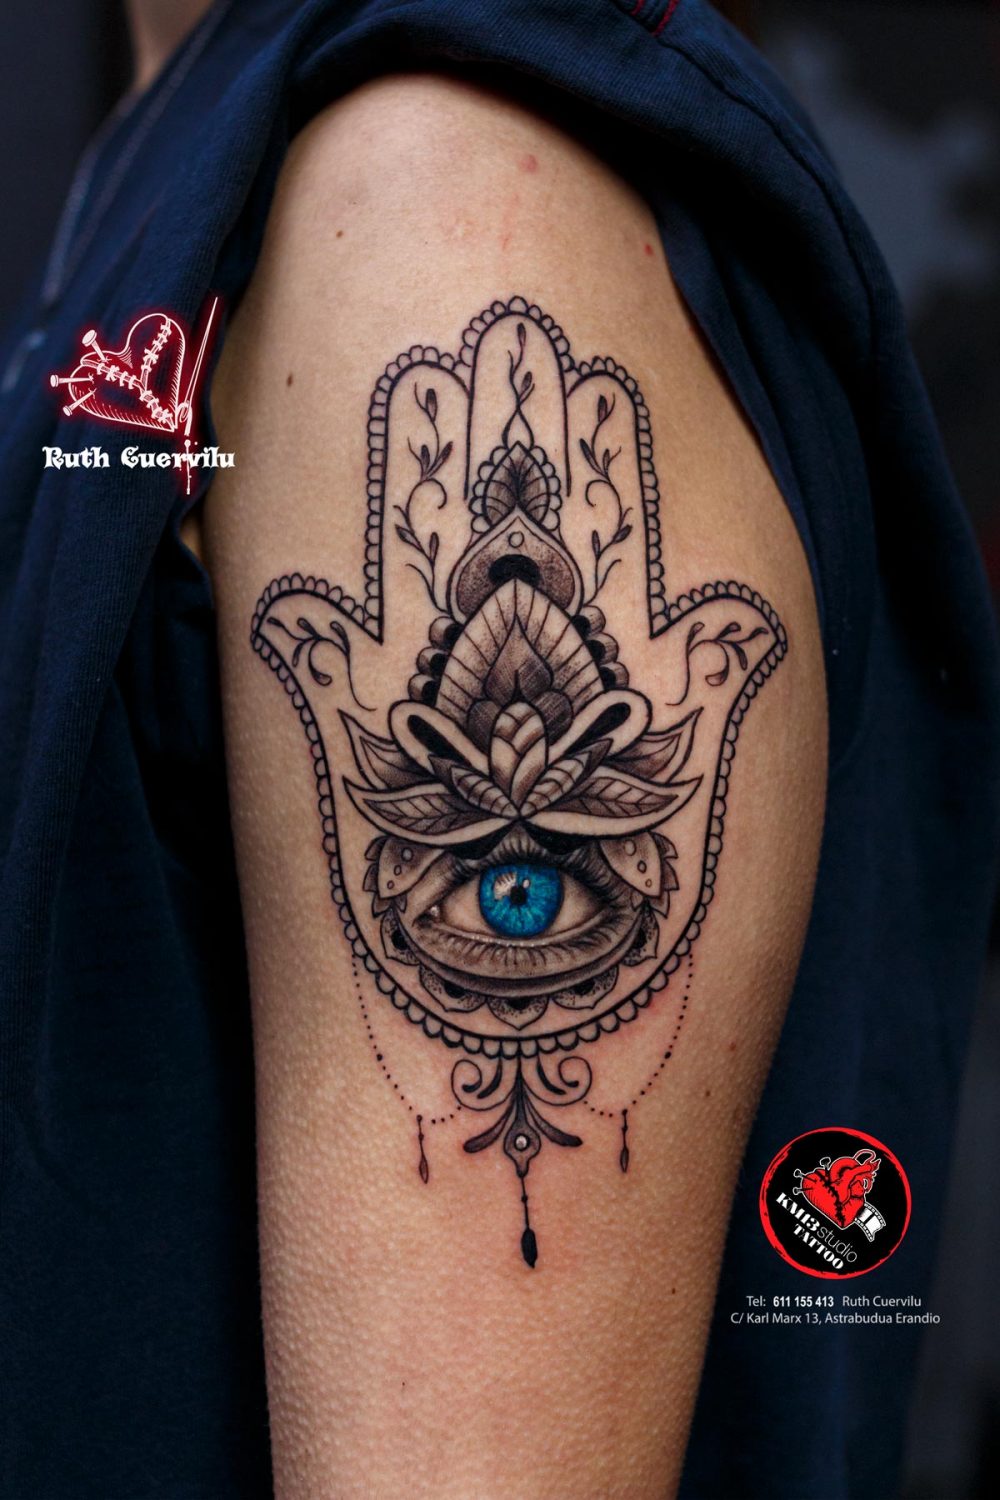 Tatuaje mano de fatima y ojo realismo color Iraida - Ruth Cuervilu Tattoo - KM13 Studio - estudio de tatuajes erandio astrabudua bilbao bizkaia